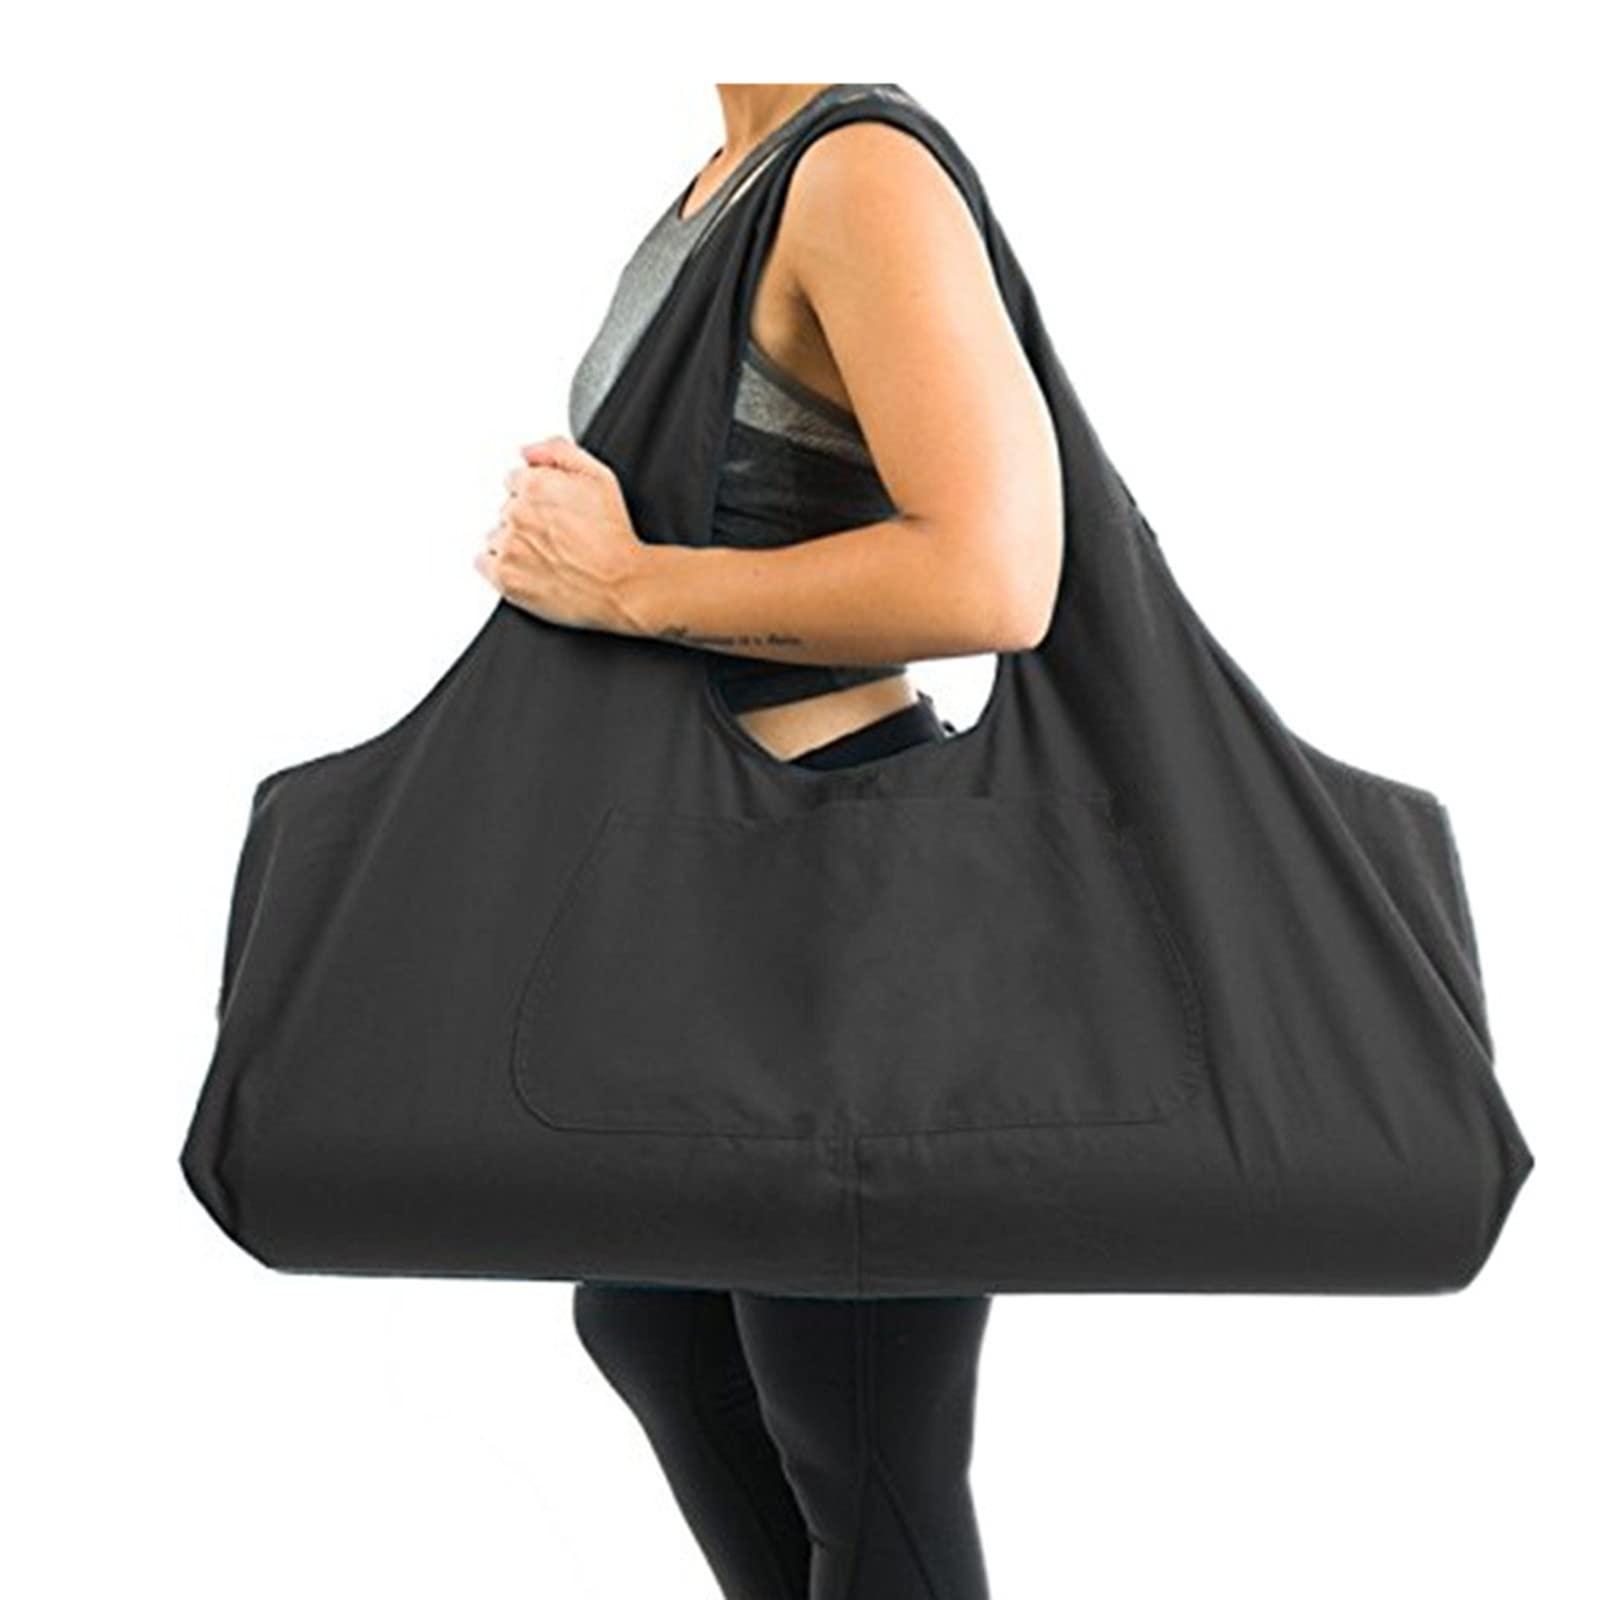 3DTengkit Yoga Bag Large Yoga Mat Bag,Canvas Yoga mat Tote Bag with Inside Zip Pocket Fits Most Size Mats (black)